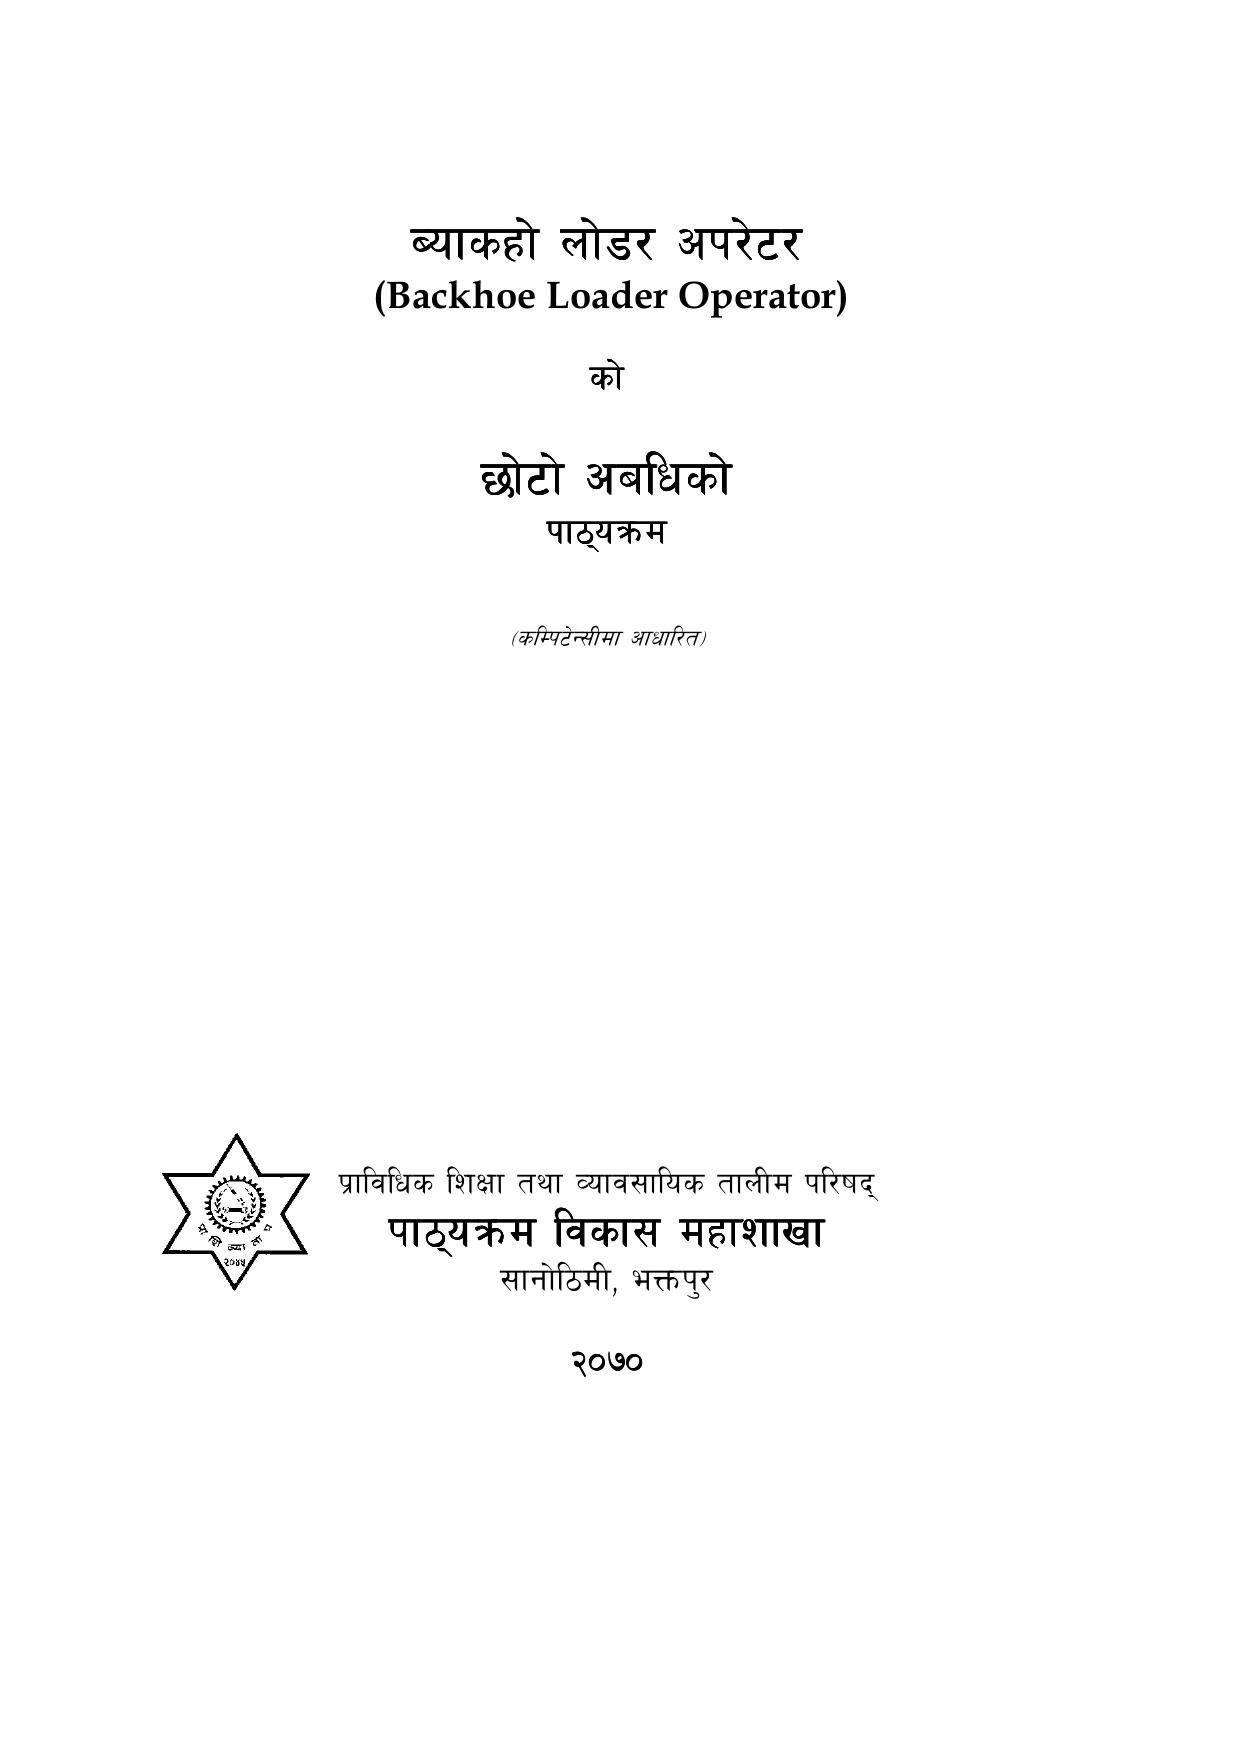 ब्याकहो लोडर अपरेटर Backhoo Loader Operator, 2015